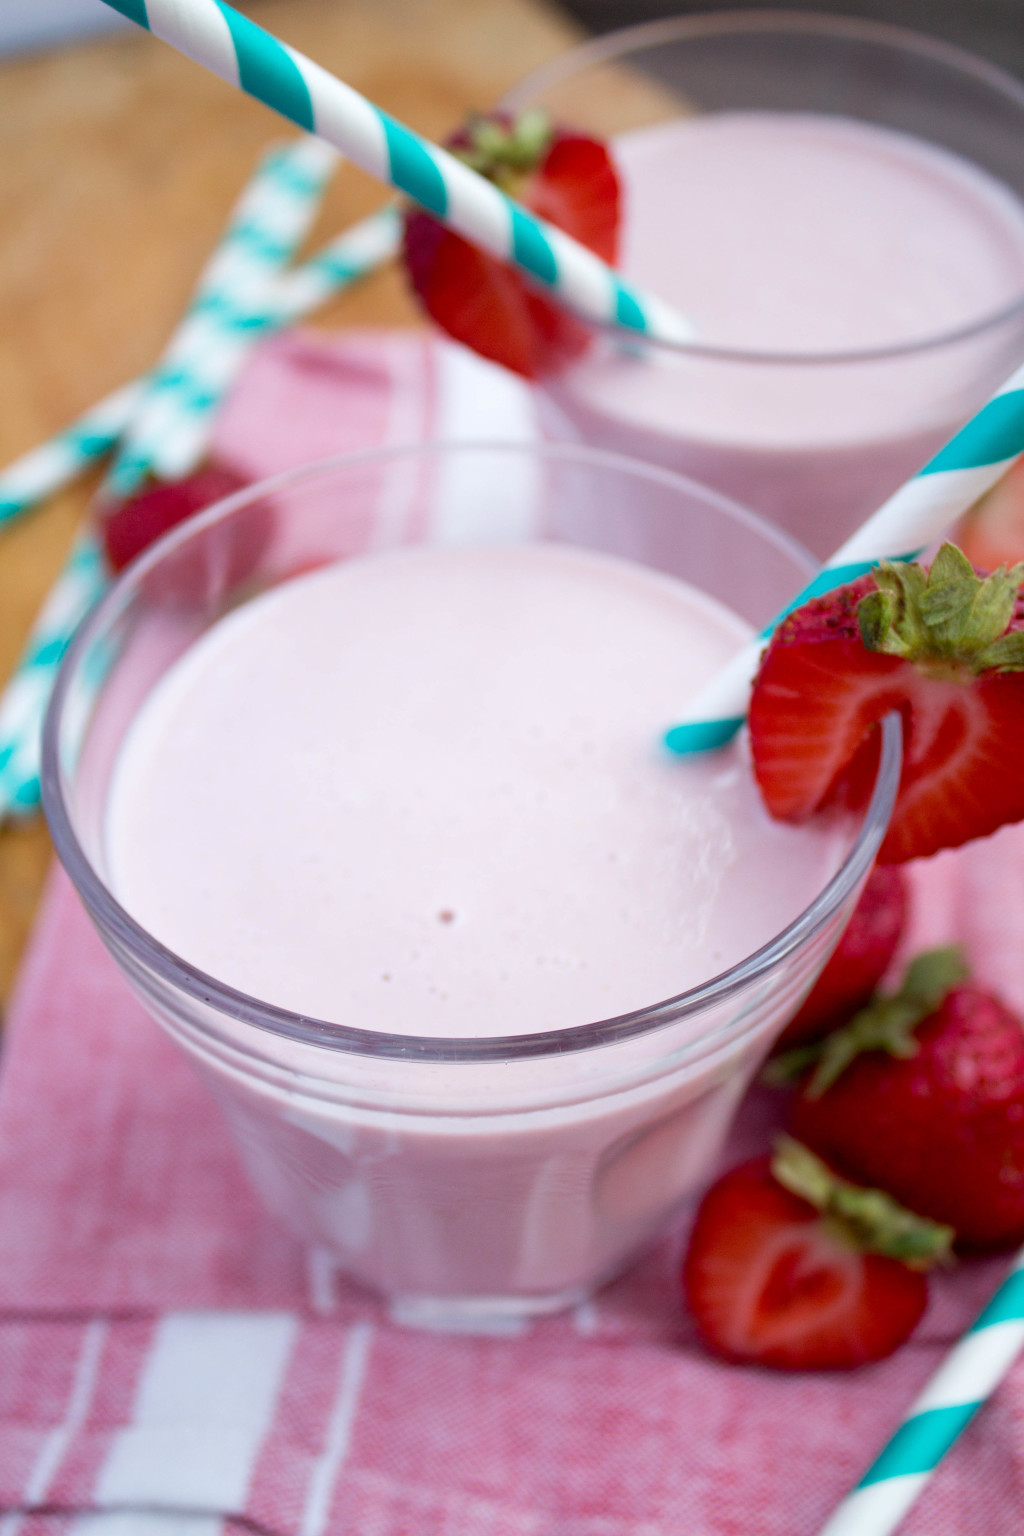 homemade strawberry milk